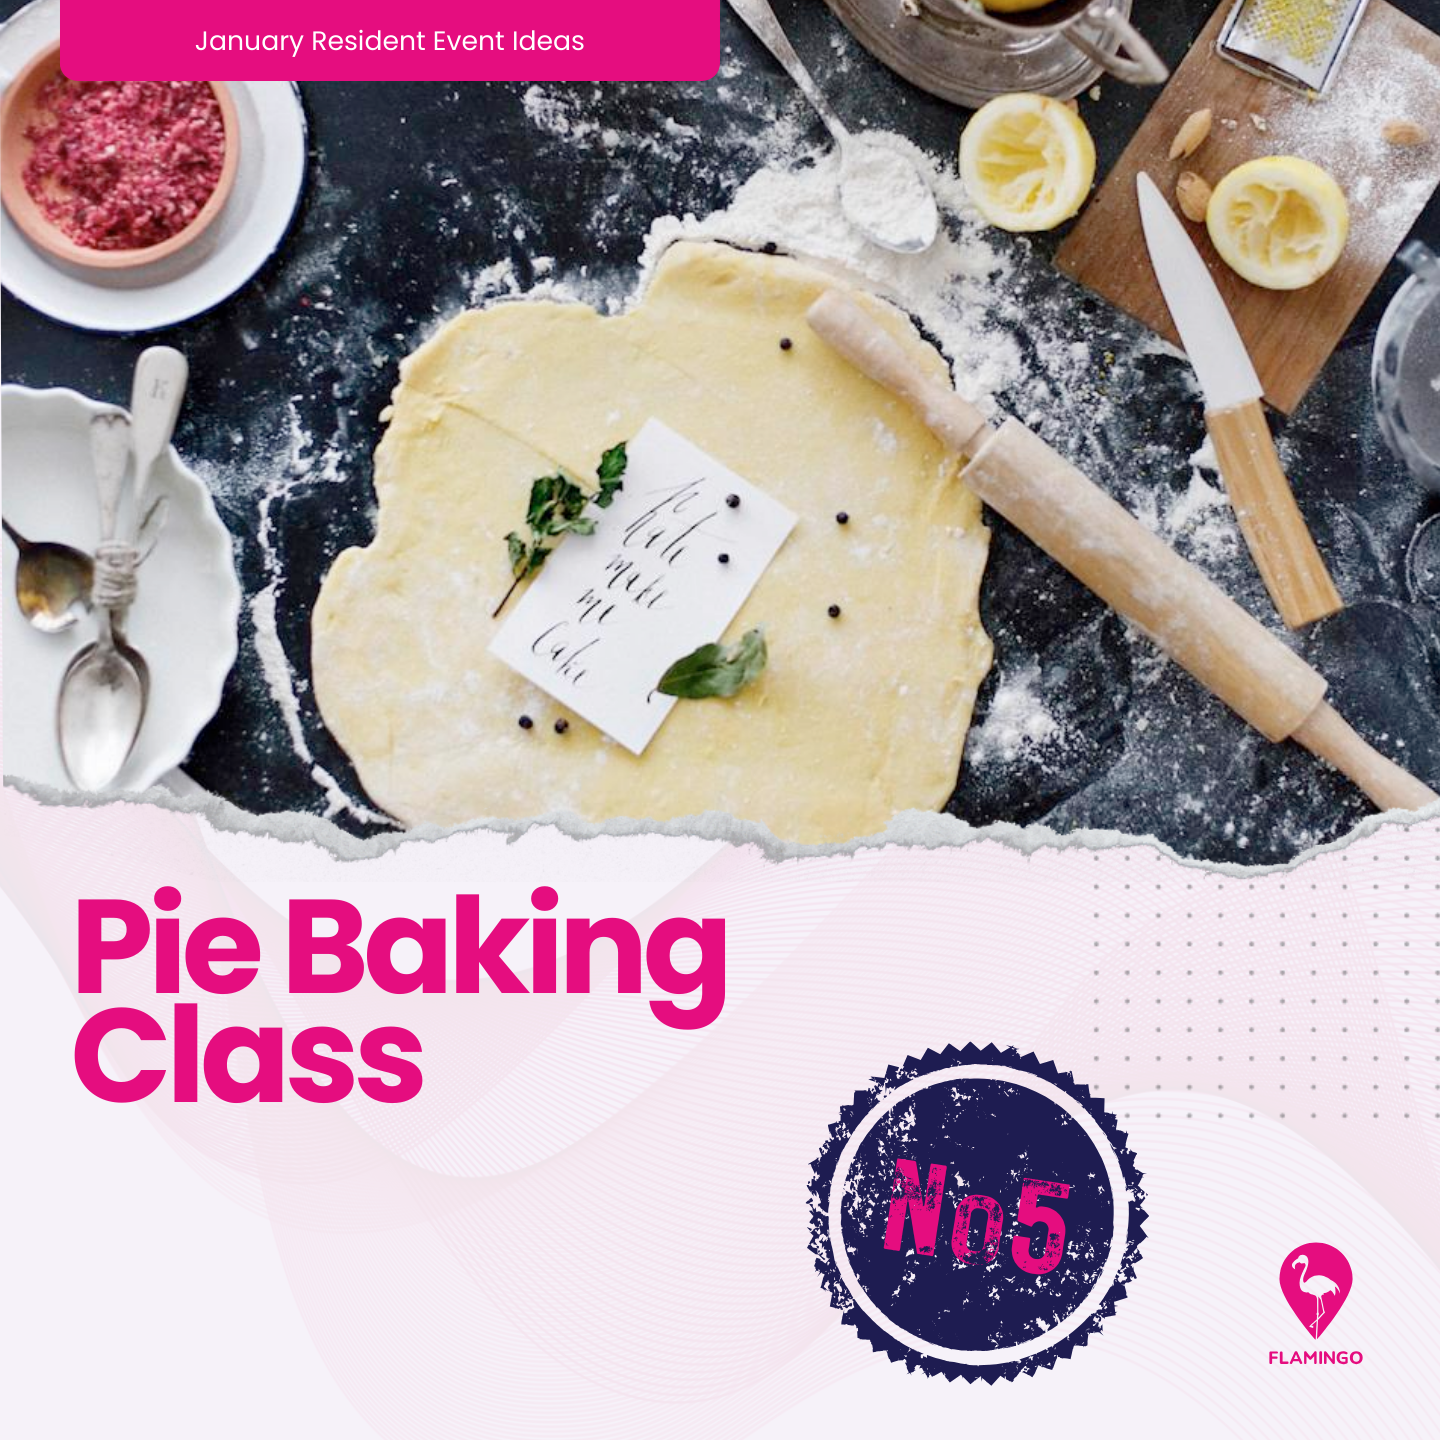 Pie Baking Class | January Resident Event Ideas